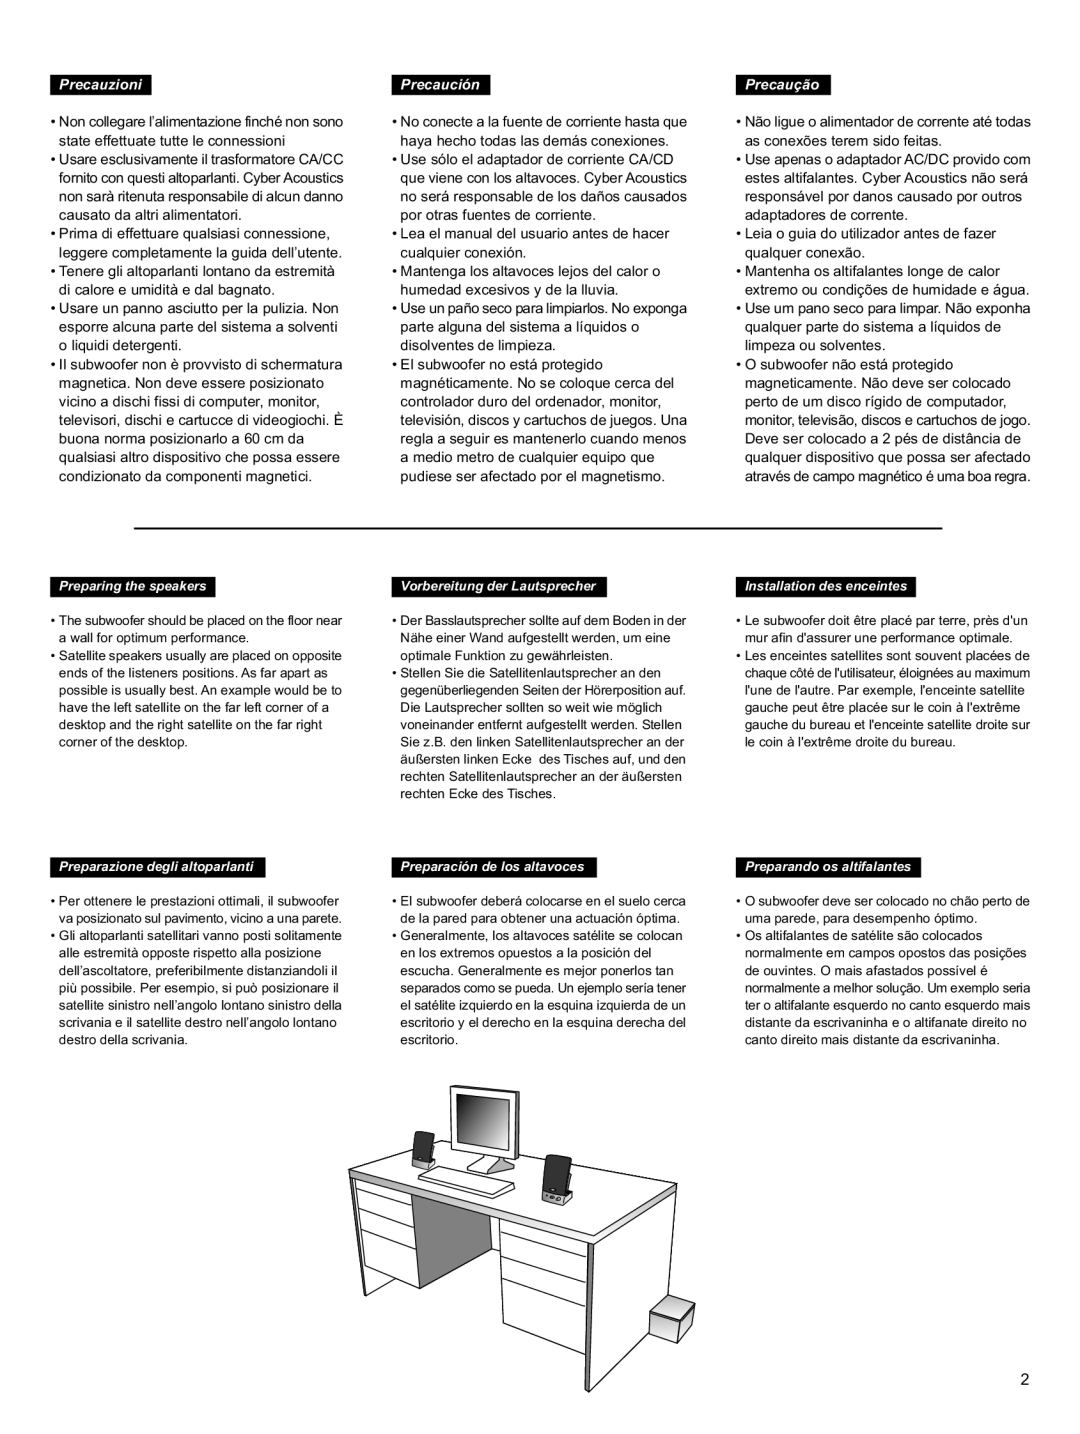 Cyber Acoustics CA-3.1 manual Precauzioni, Precaución, Precaução, Preparing the speakers, Vorbereitung der Lautsprecher 